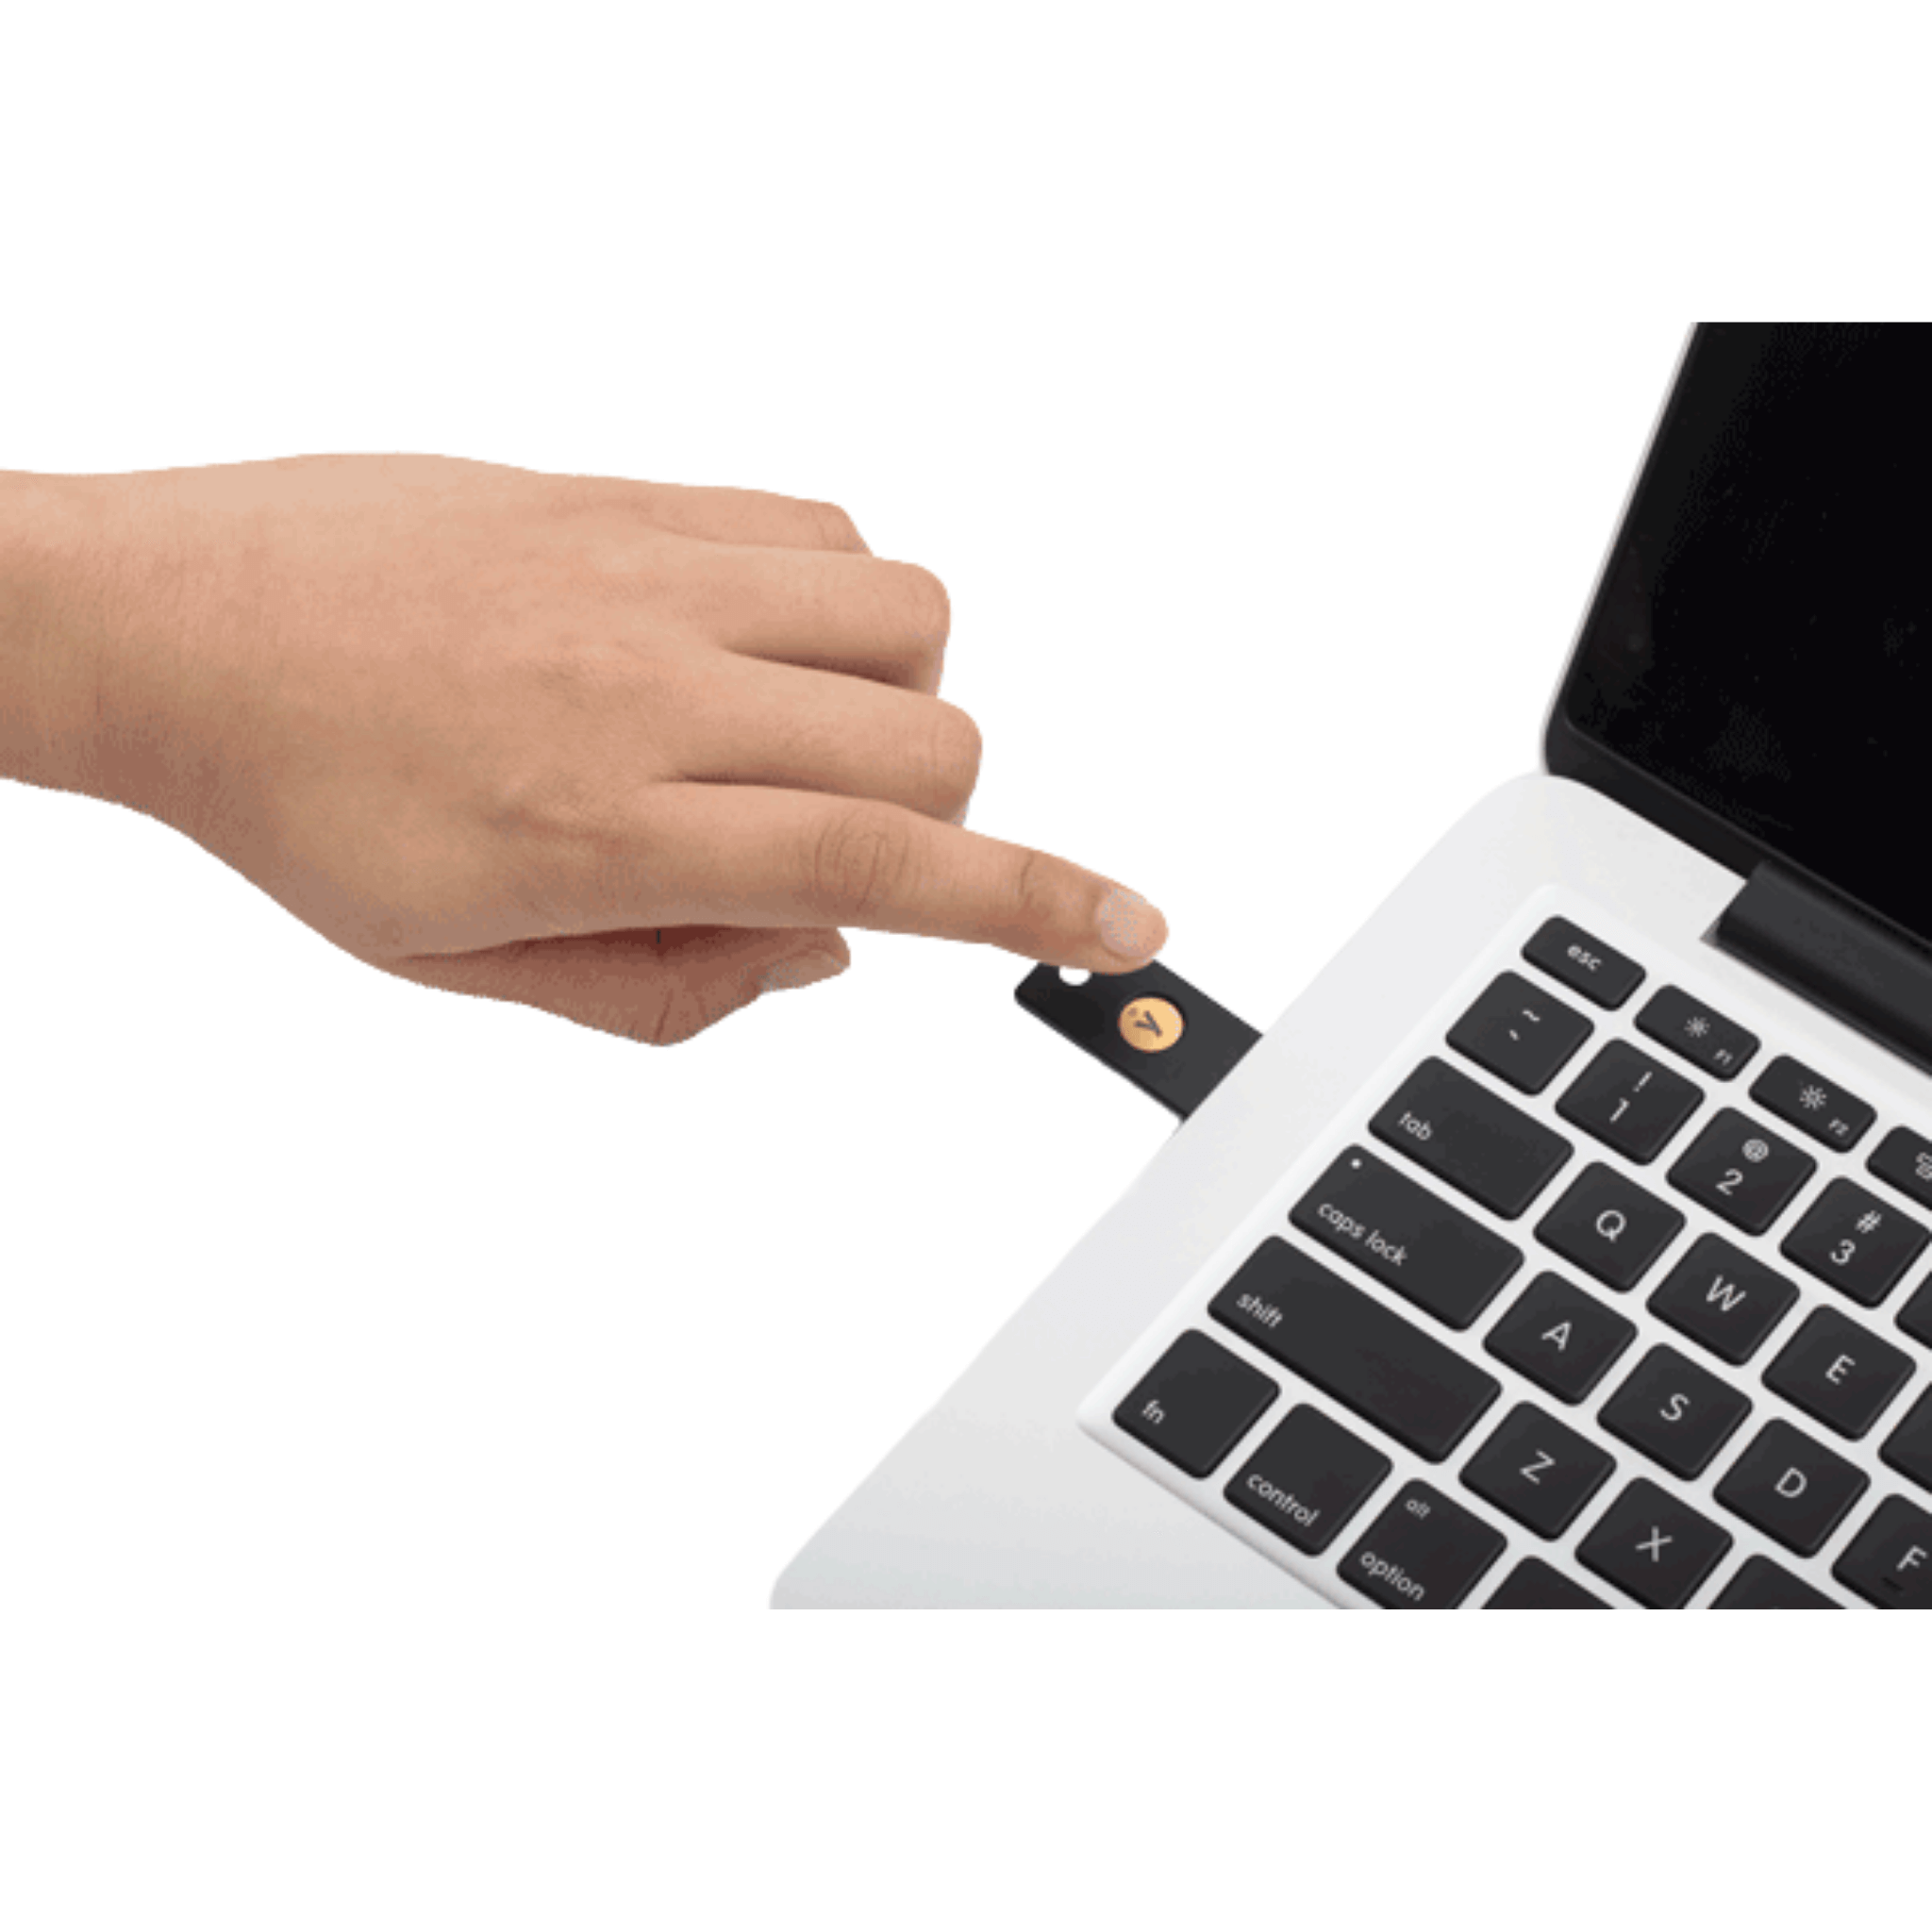 Yubico YubiKey 5 NFC Security Key Plugged Into A Laptop